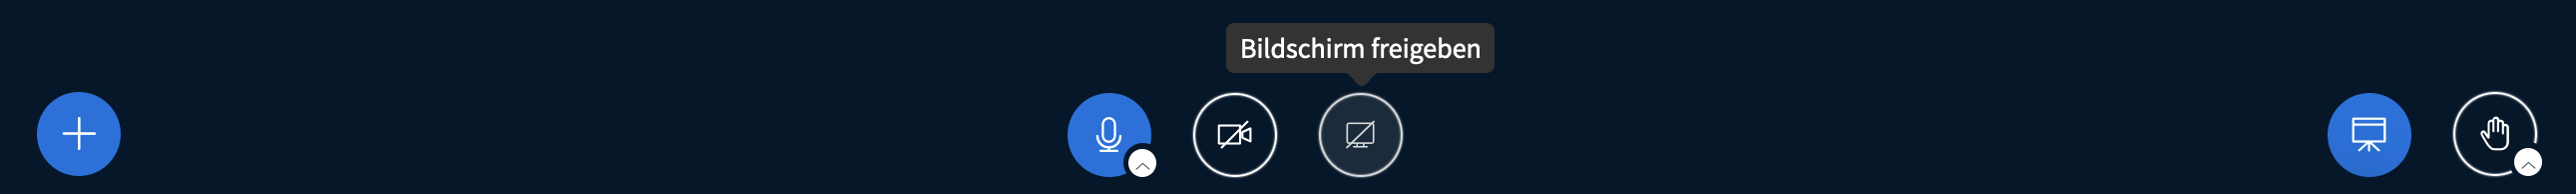 BigBlueButton Toolbar Symbol Bildschirm